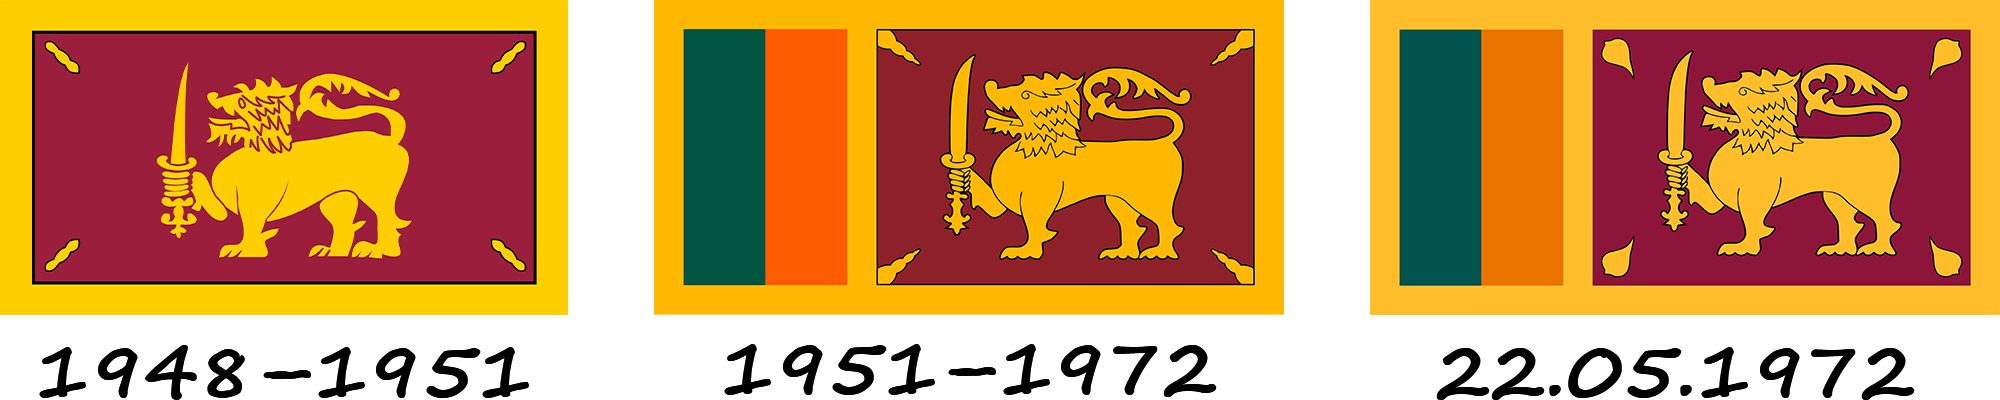 Historia de la bandera de Sri Lanka